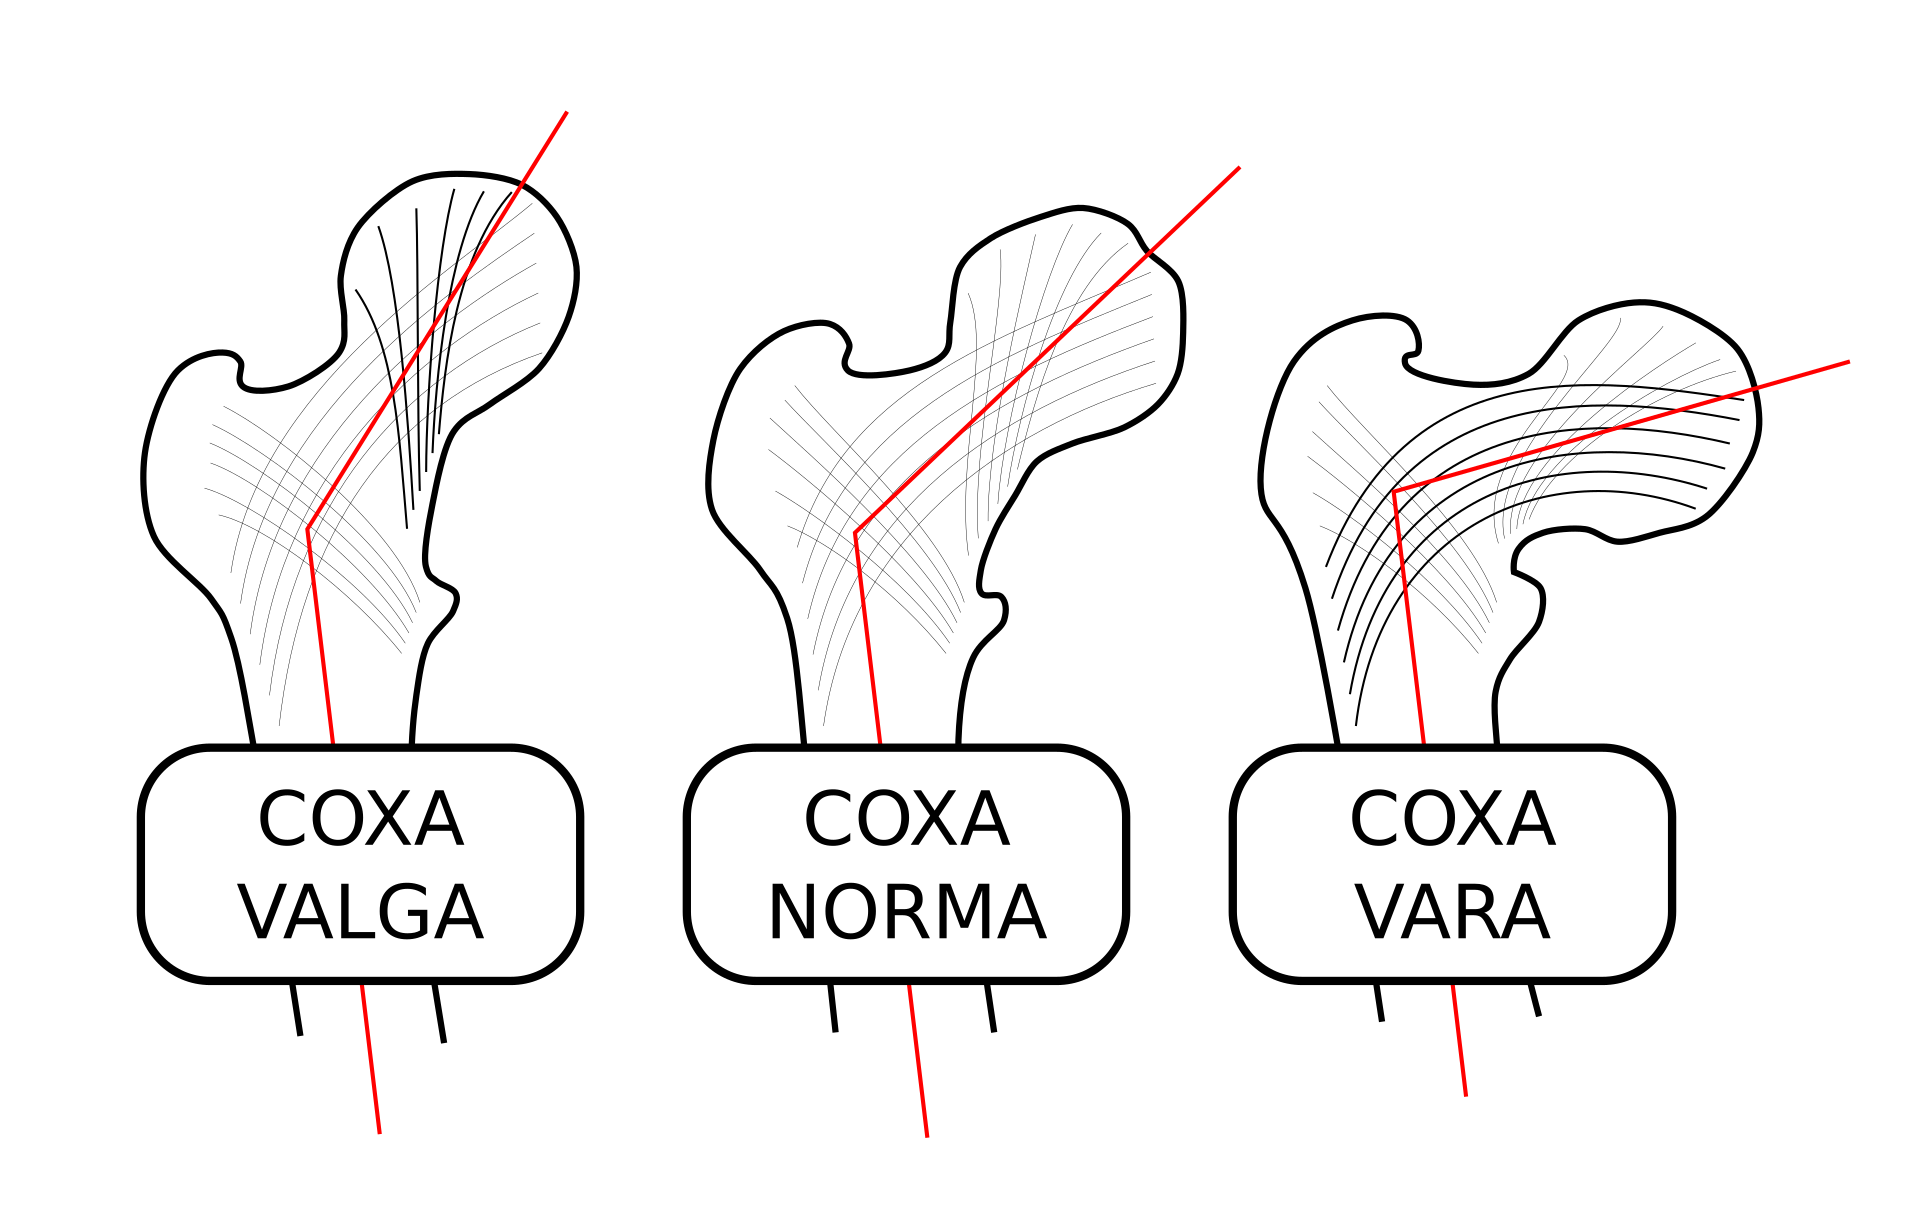 https://upload.wikimedia.org/wikipedia/commons/thumb/a/a4/Coxa-valga-norma-vara-000.svg/1920px-Coxa-valga-norma-vara-000.svg.png